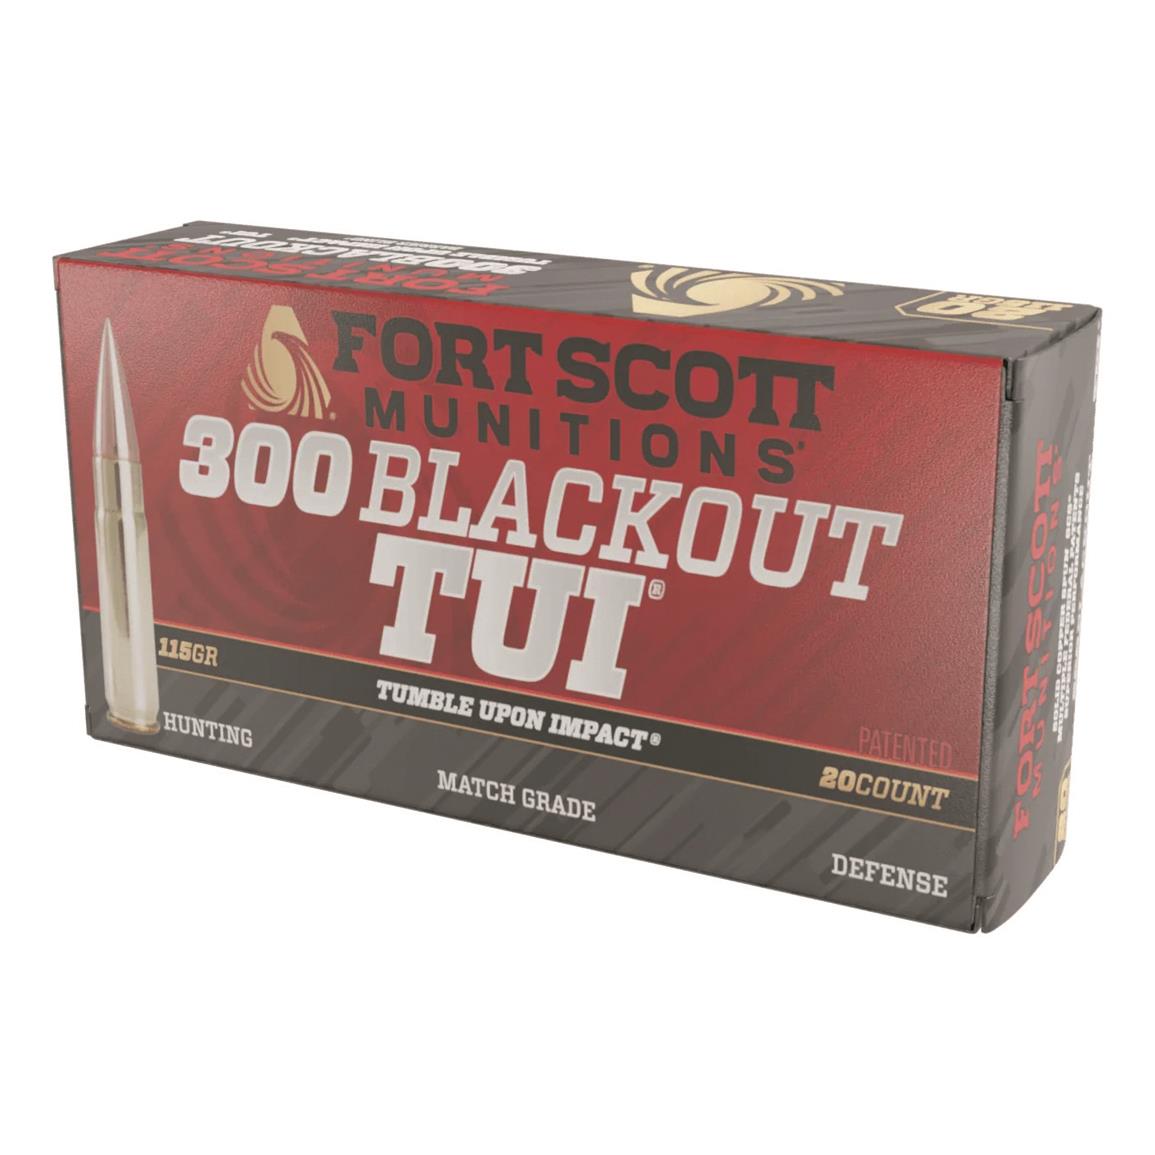 Fort Scott Tumble Upon Impact Ammo, 300 BLK, SCS, 115 Grain, 20 Rounds